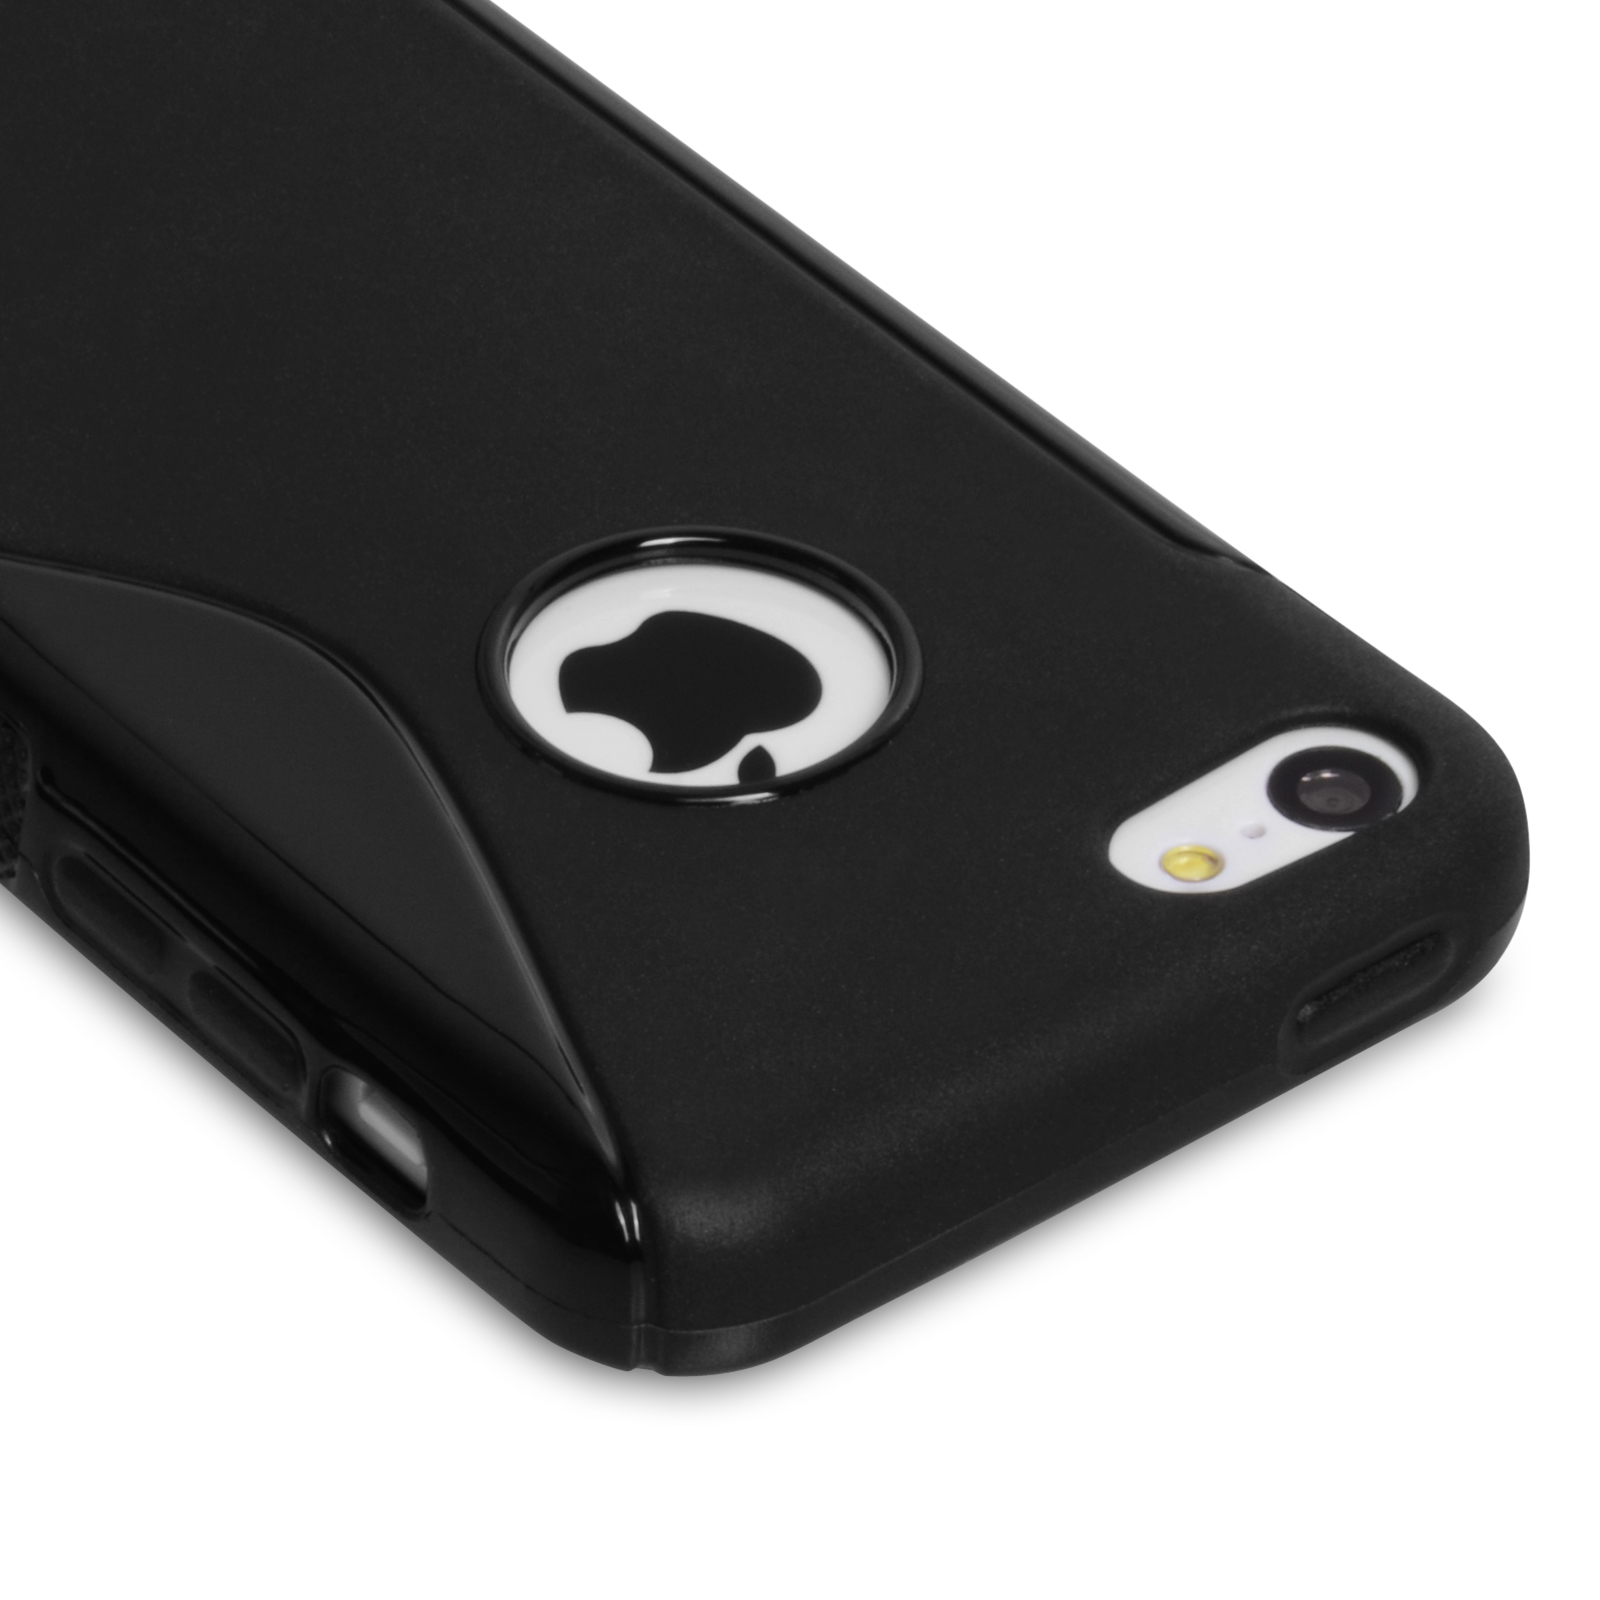 Caseflex iPhone 5c Silicone Gel S-Line Case - Black